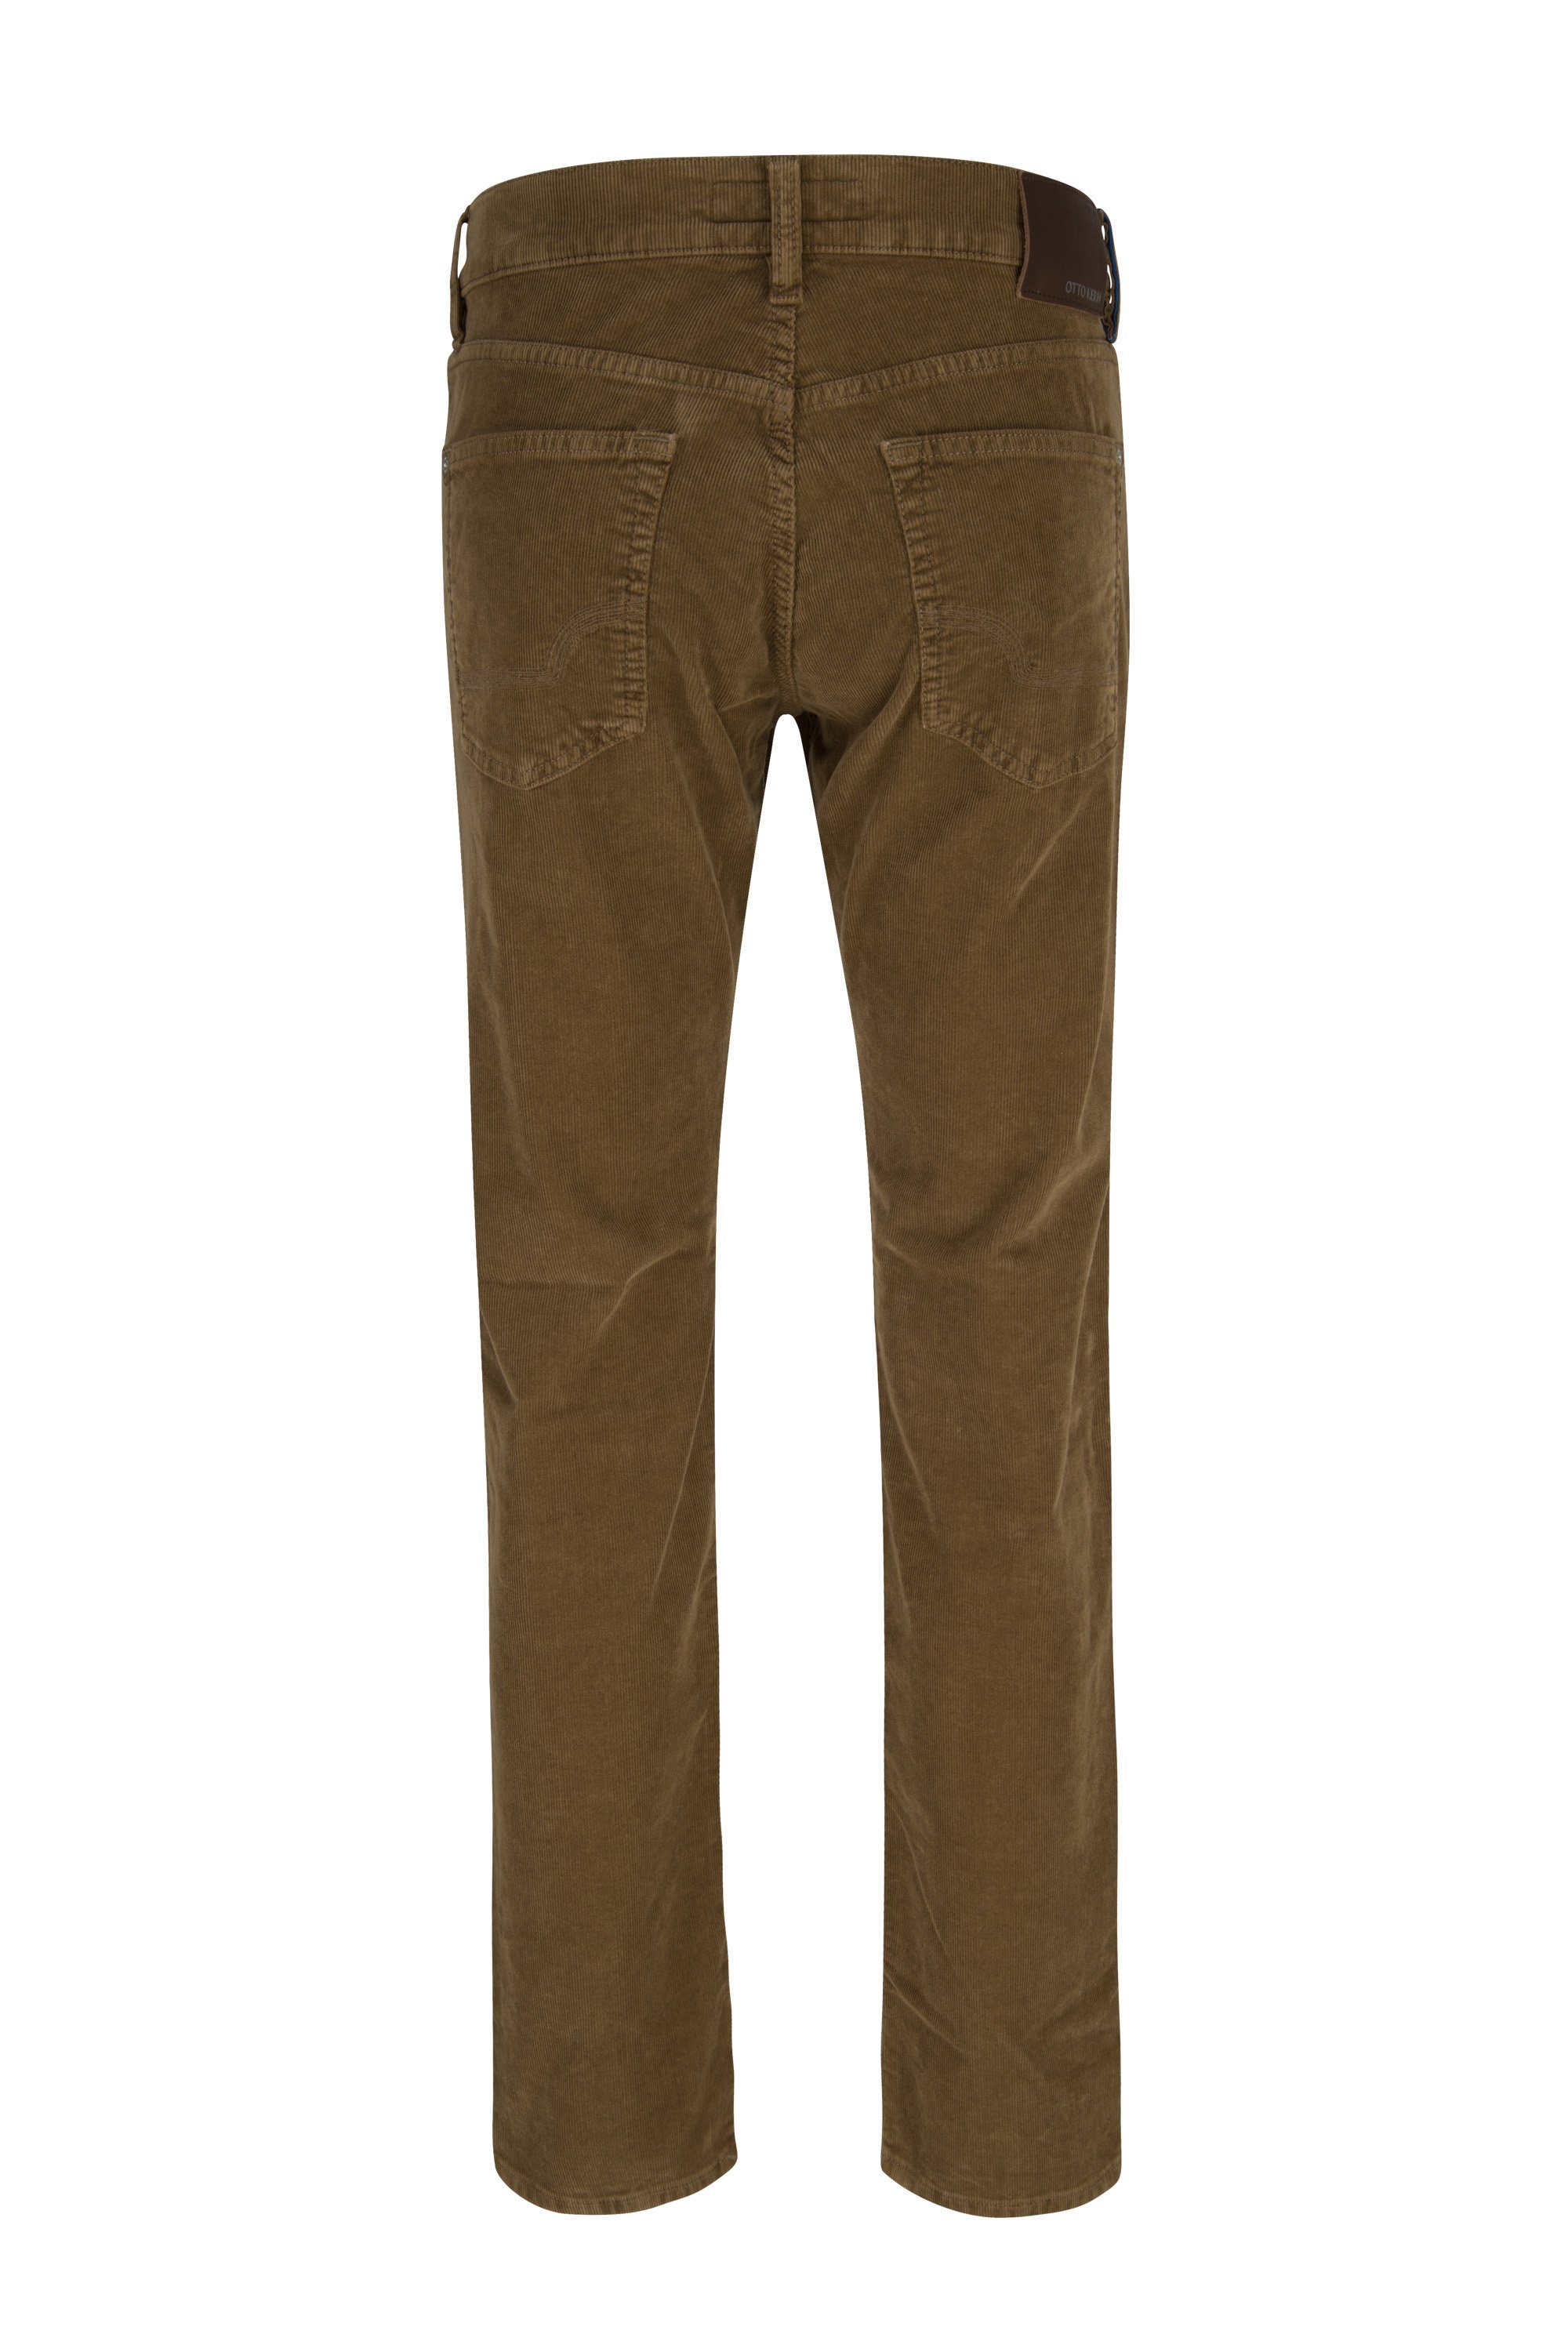 5-Pocket-Jeans OTTO KERN kelp RAY 67011 Kern 3200.8011